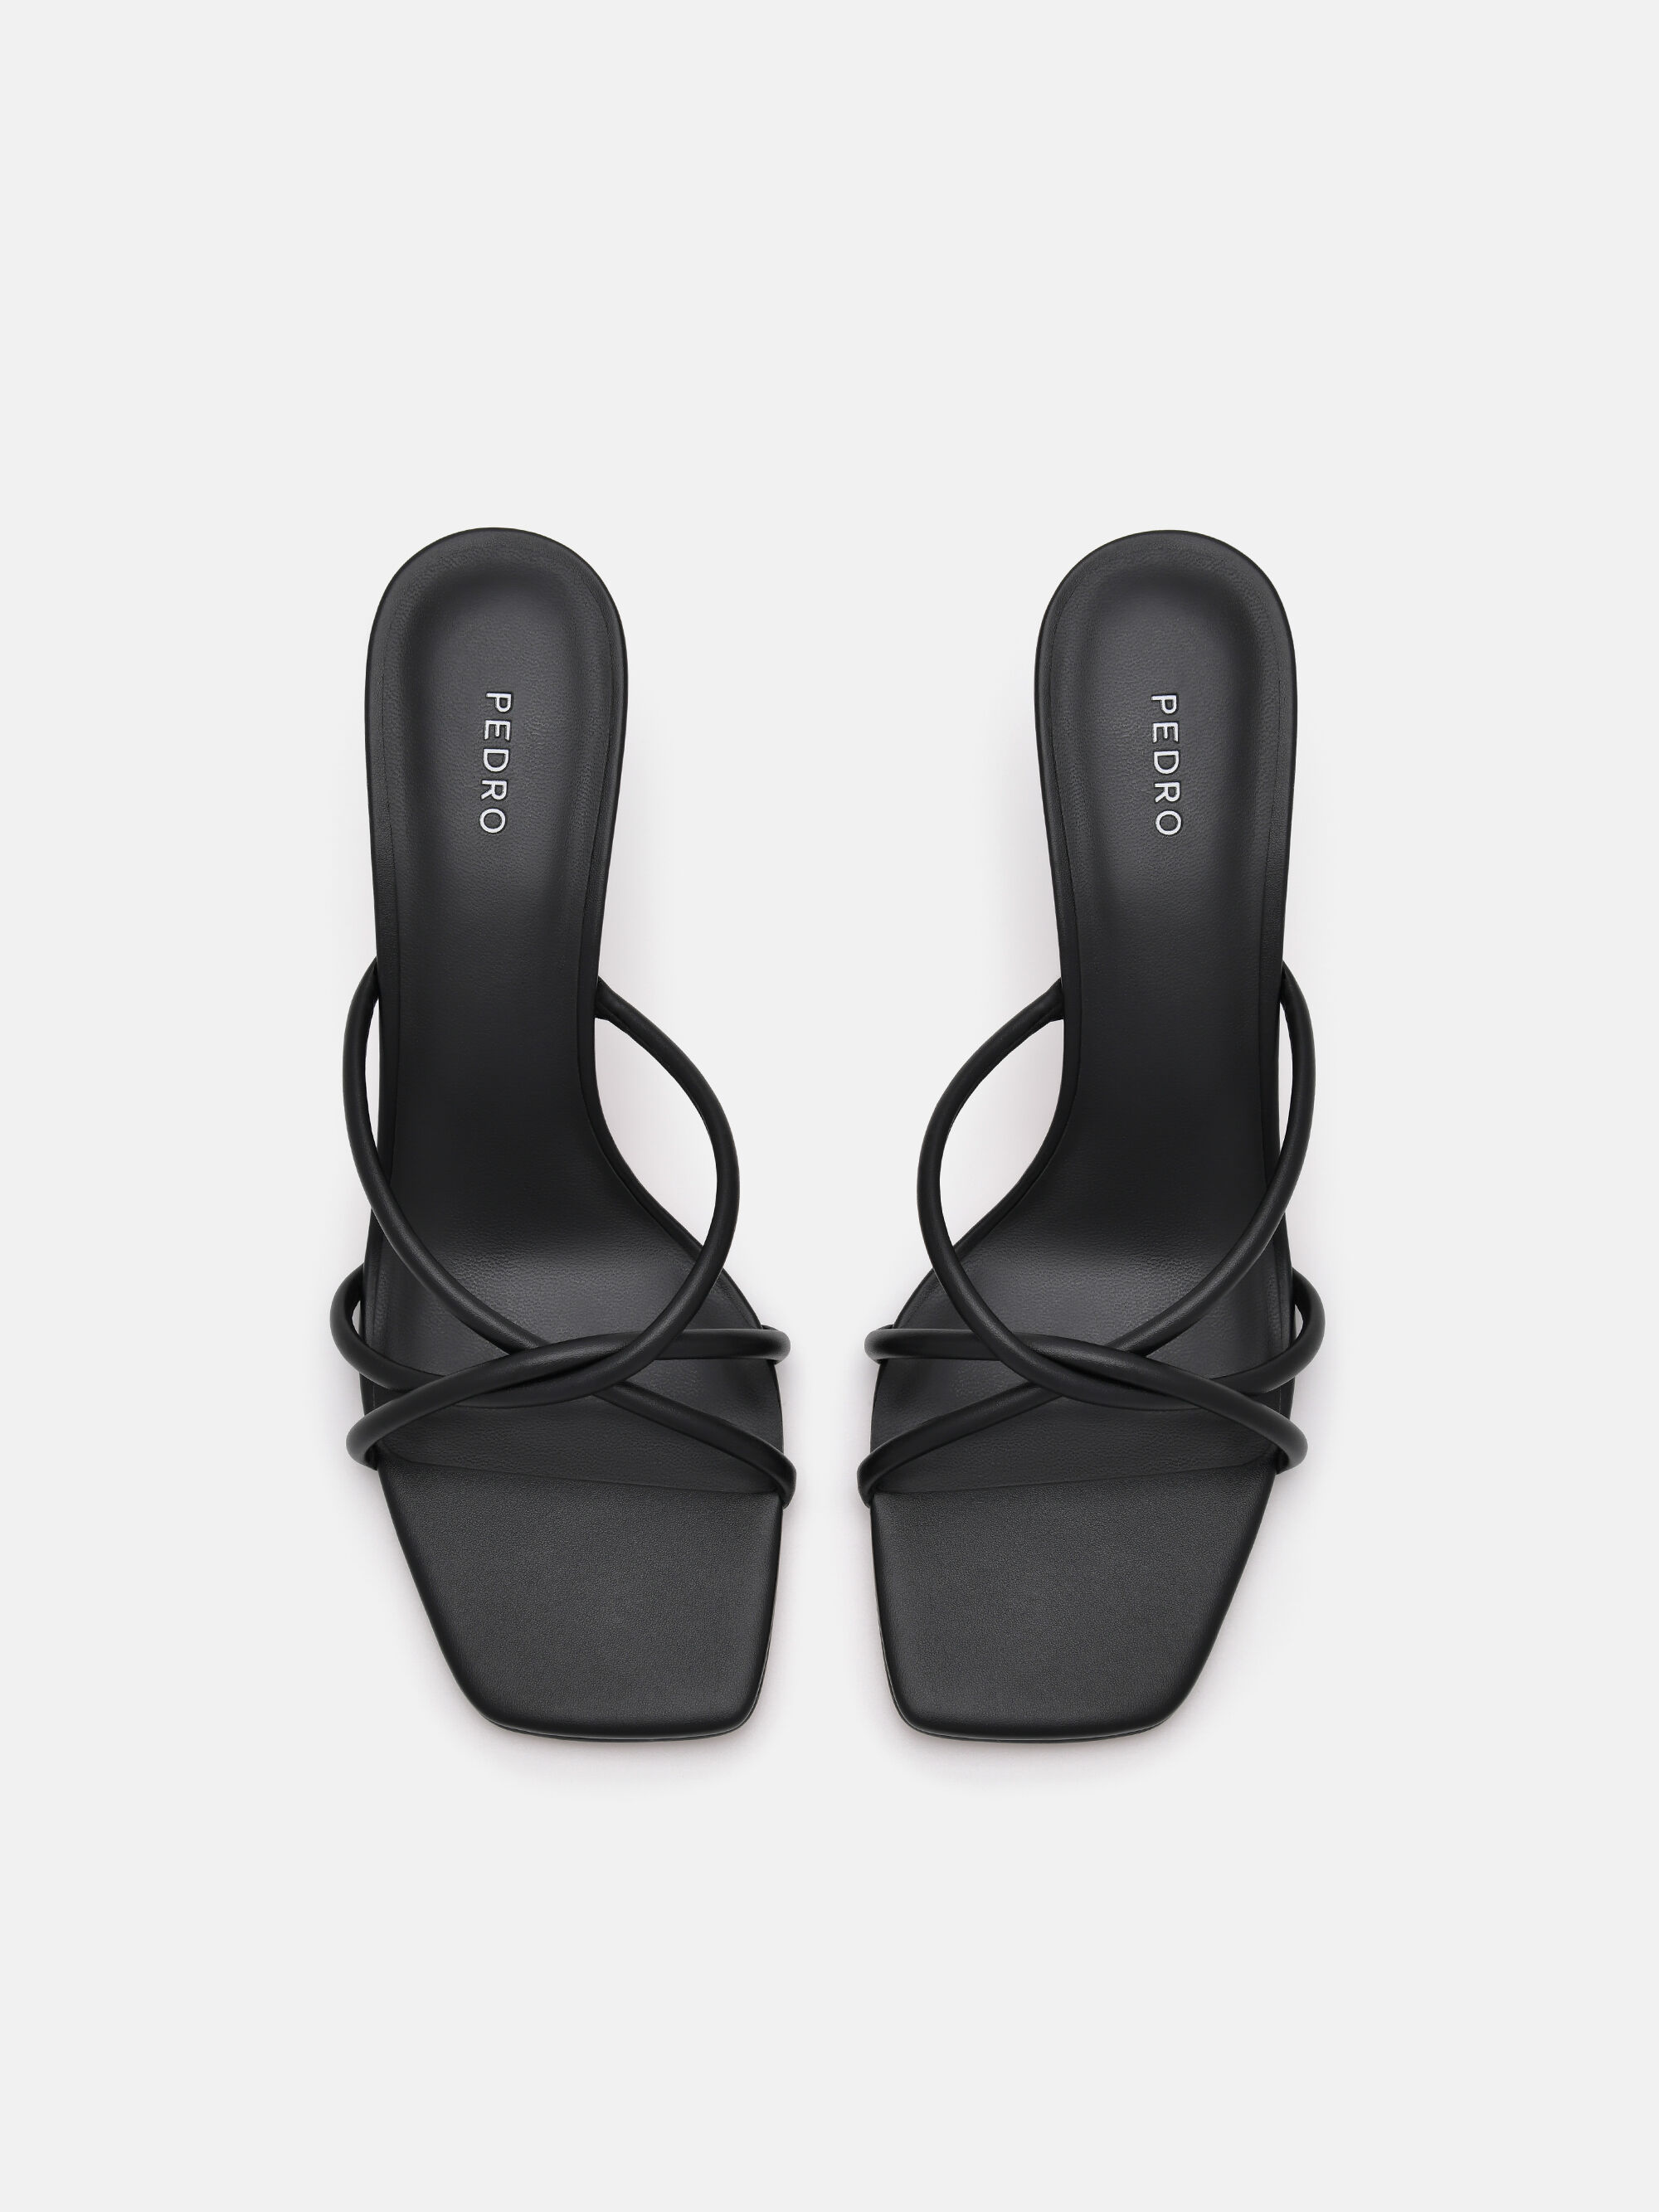 Tindi Heel Sandals, Black